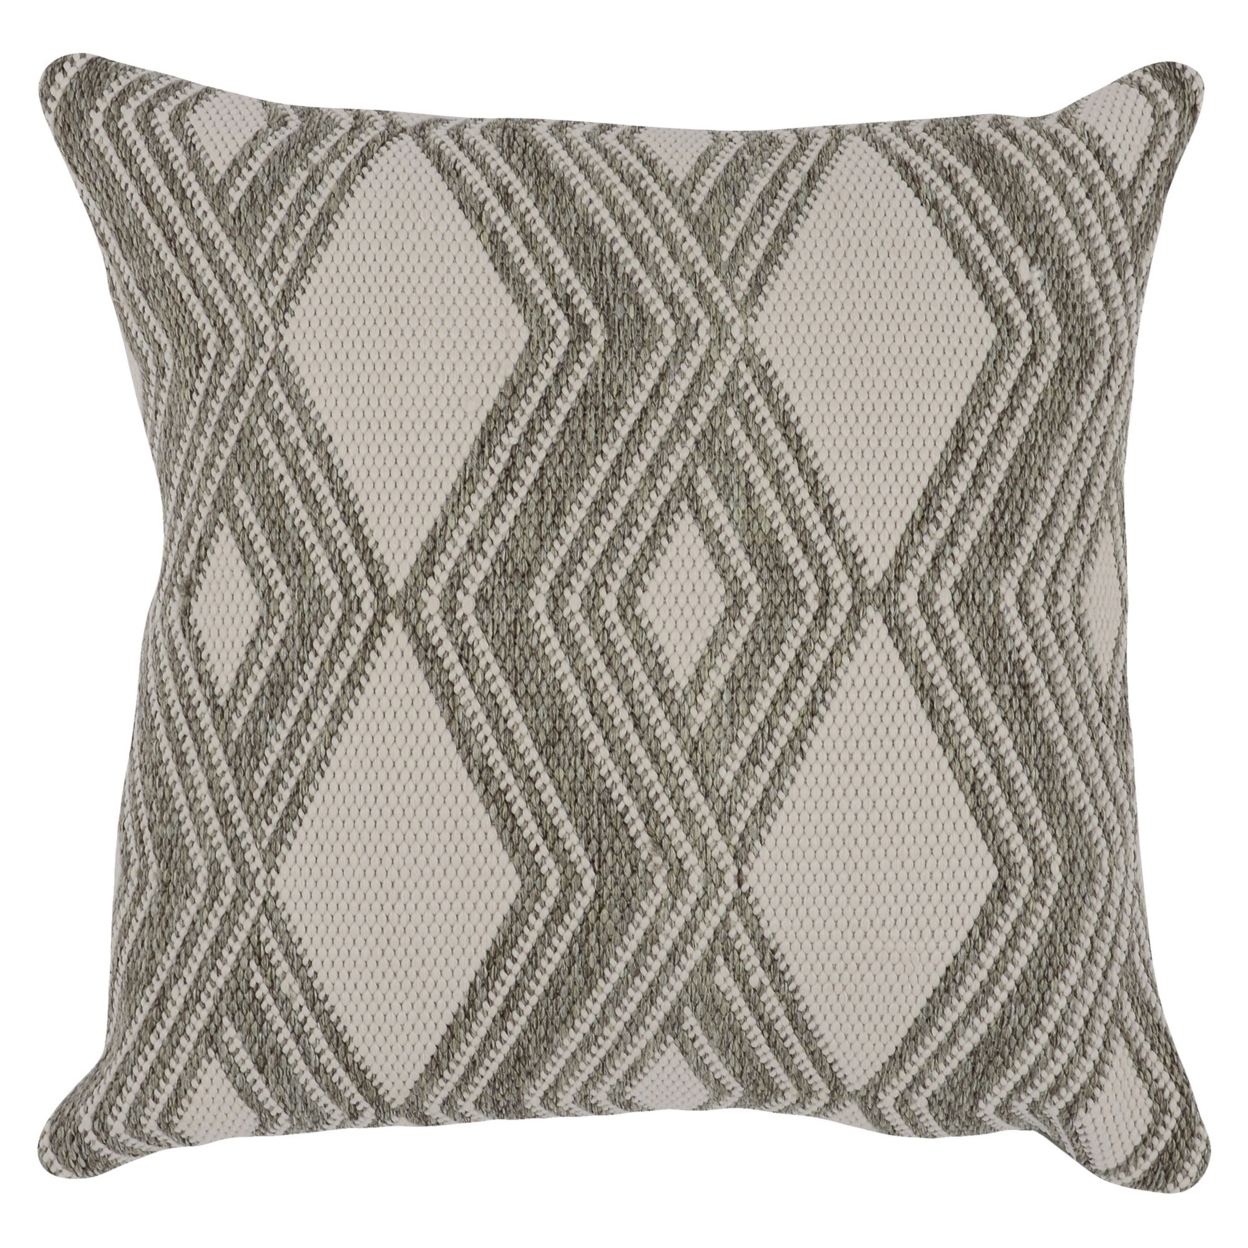 Jai 22 X 22 Outdoor Accent Throw Pillow, Handwoven Geometric Design, Gray- Saltoro Sherpi